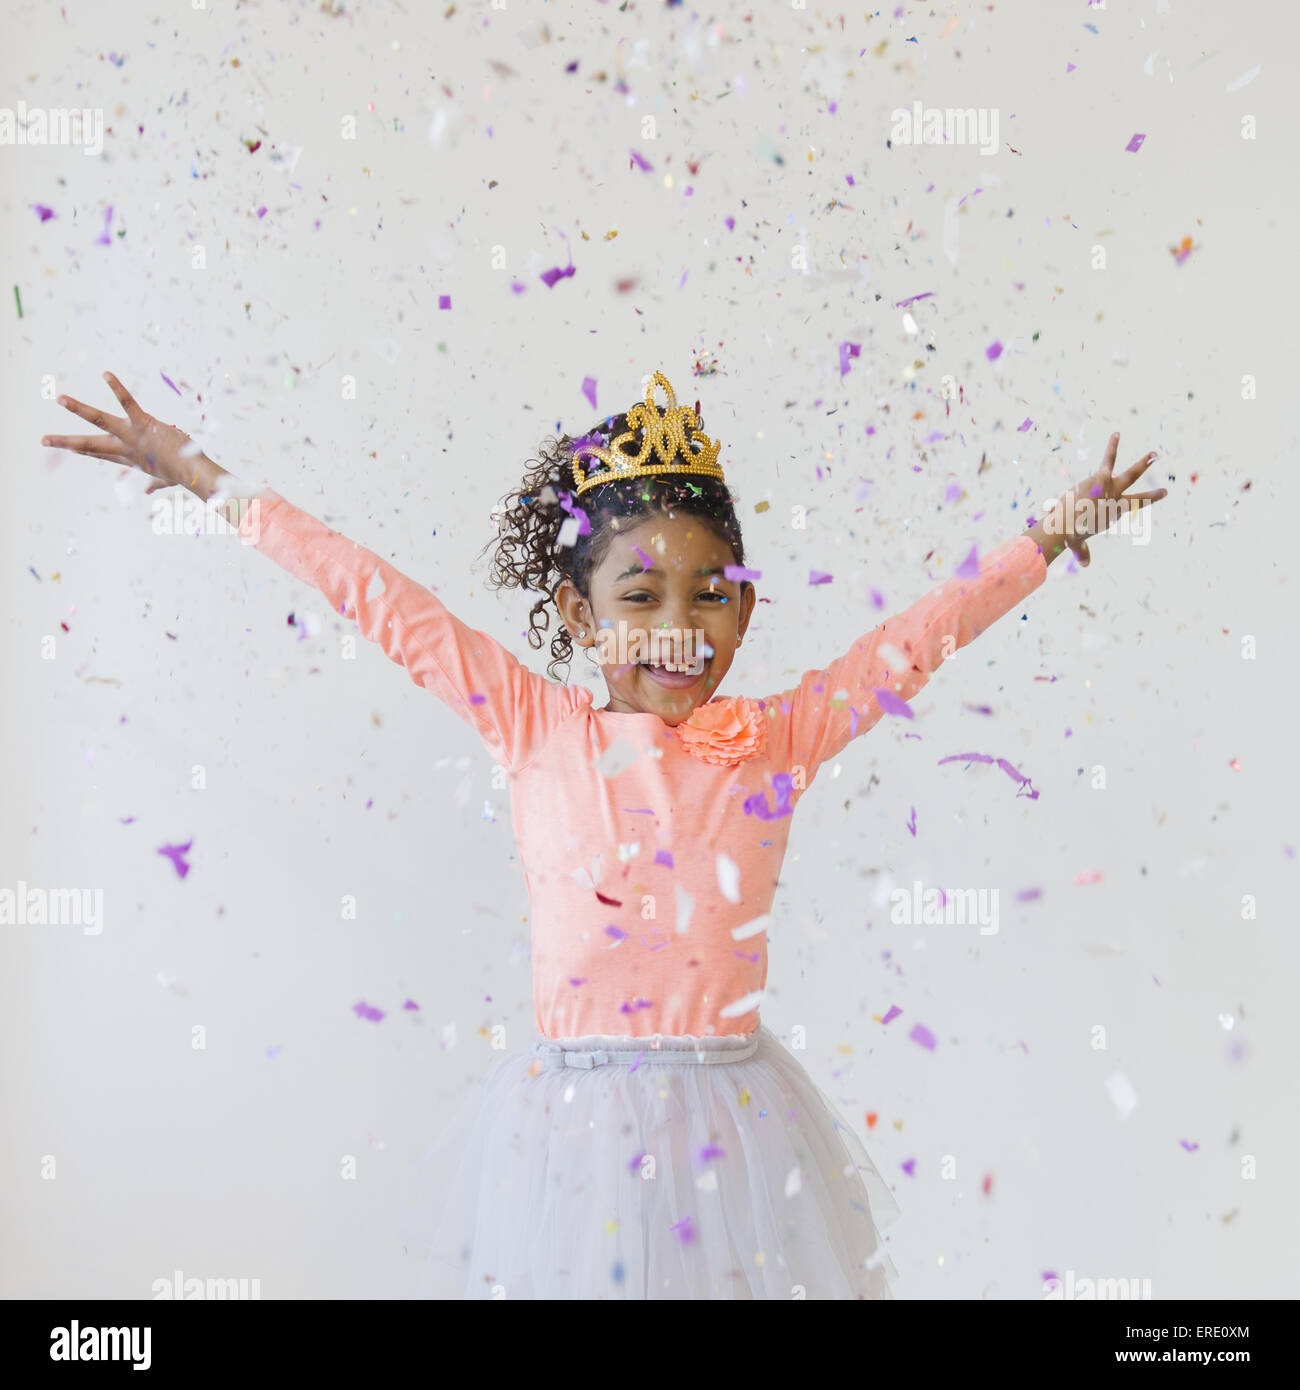 Mixed race girl wearing tiara throwing confetti Stock Photo